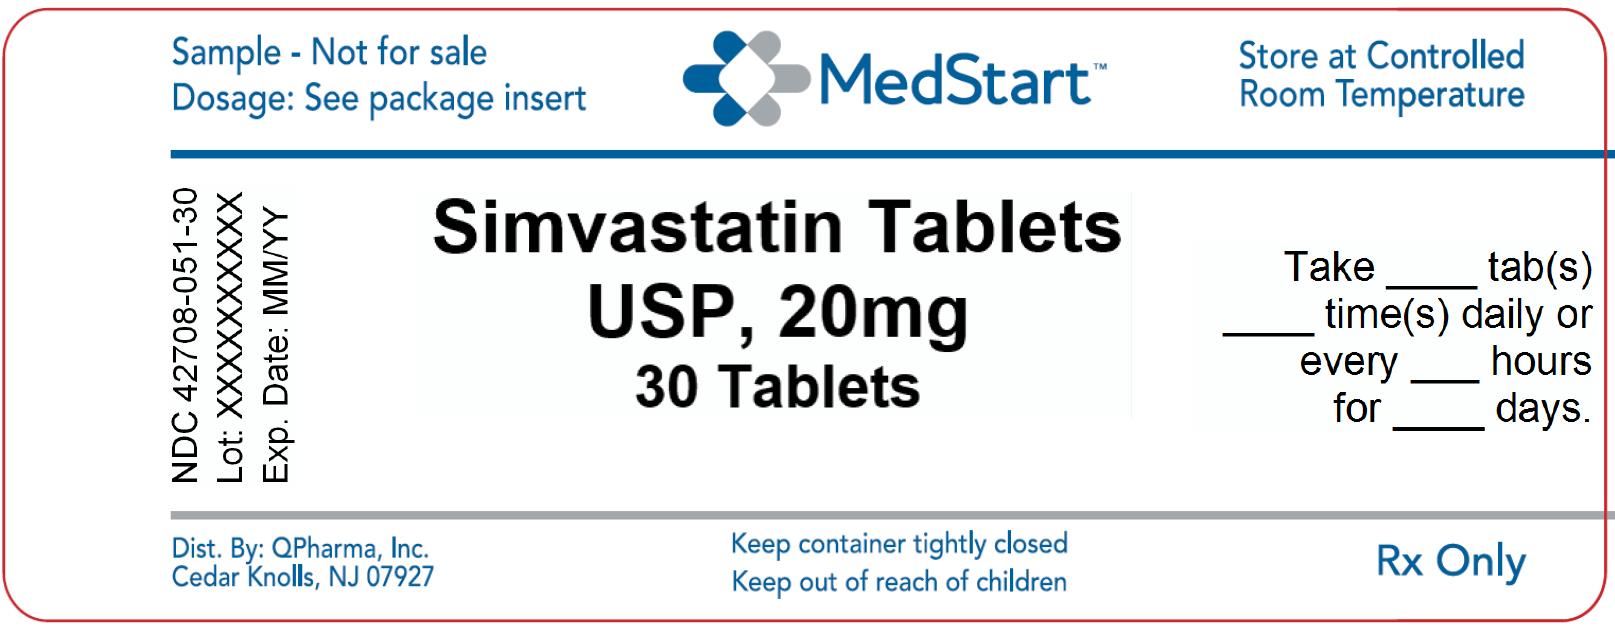 42708-051-30 Simvastatin Tablets USP 20mg x 30 V2